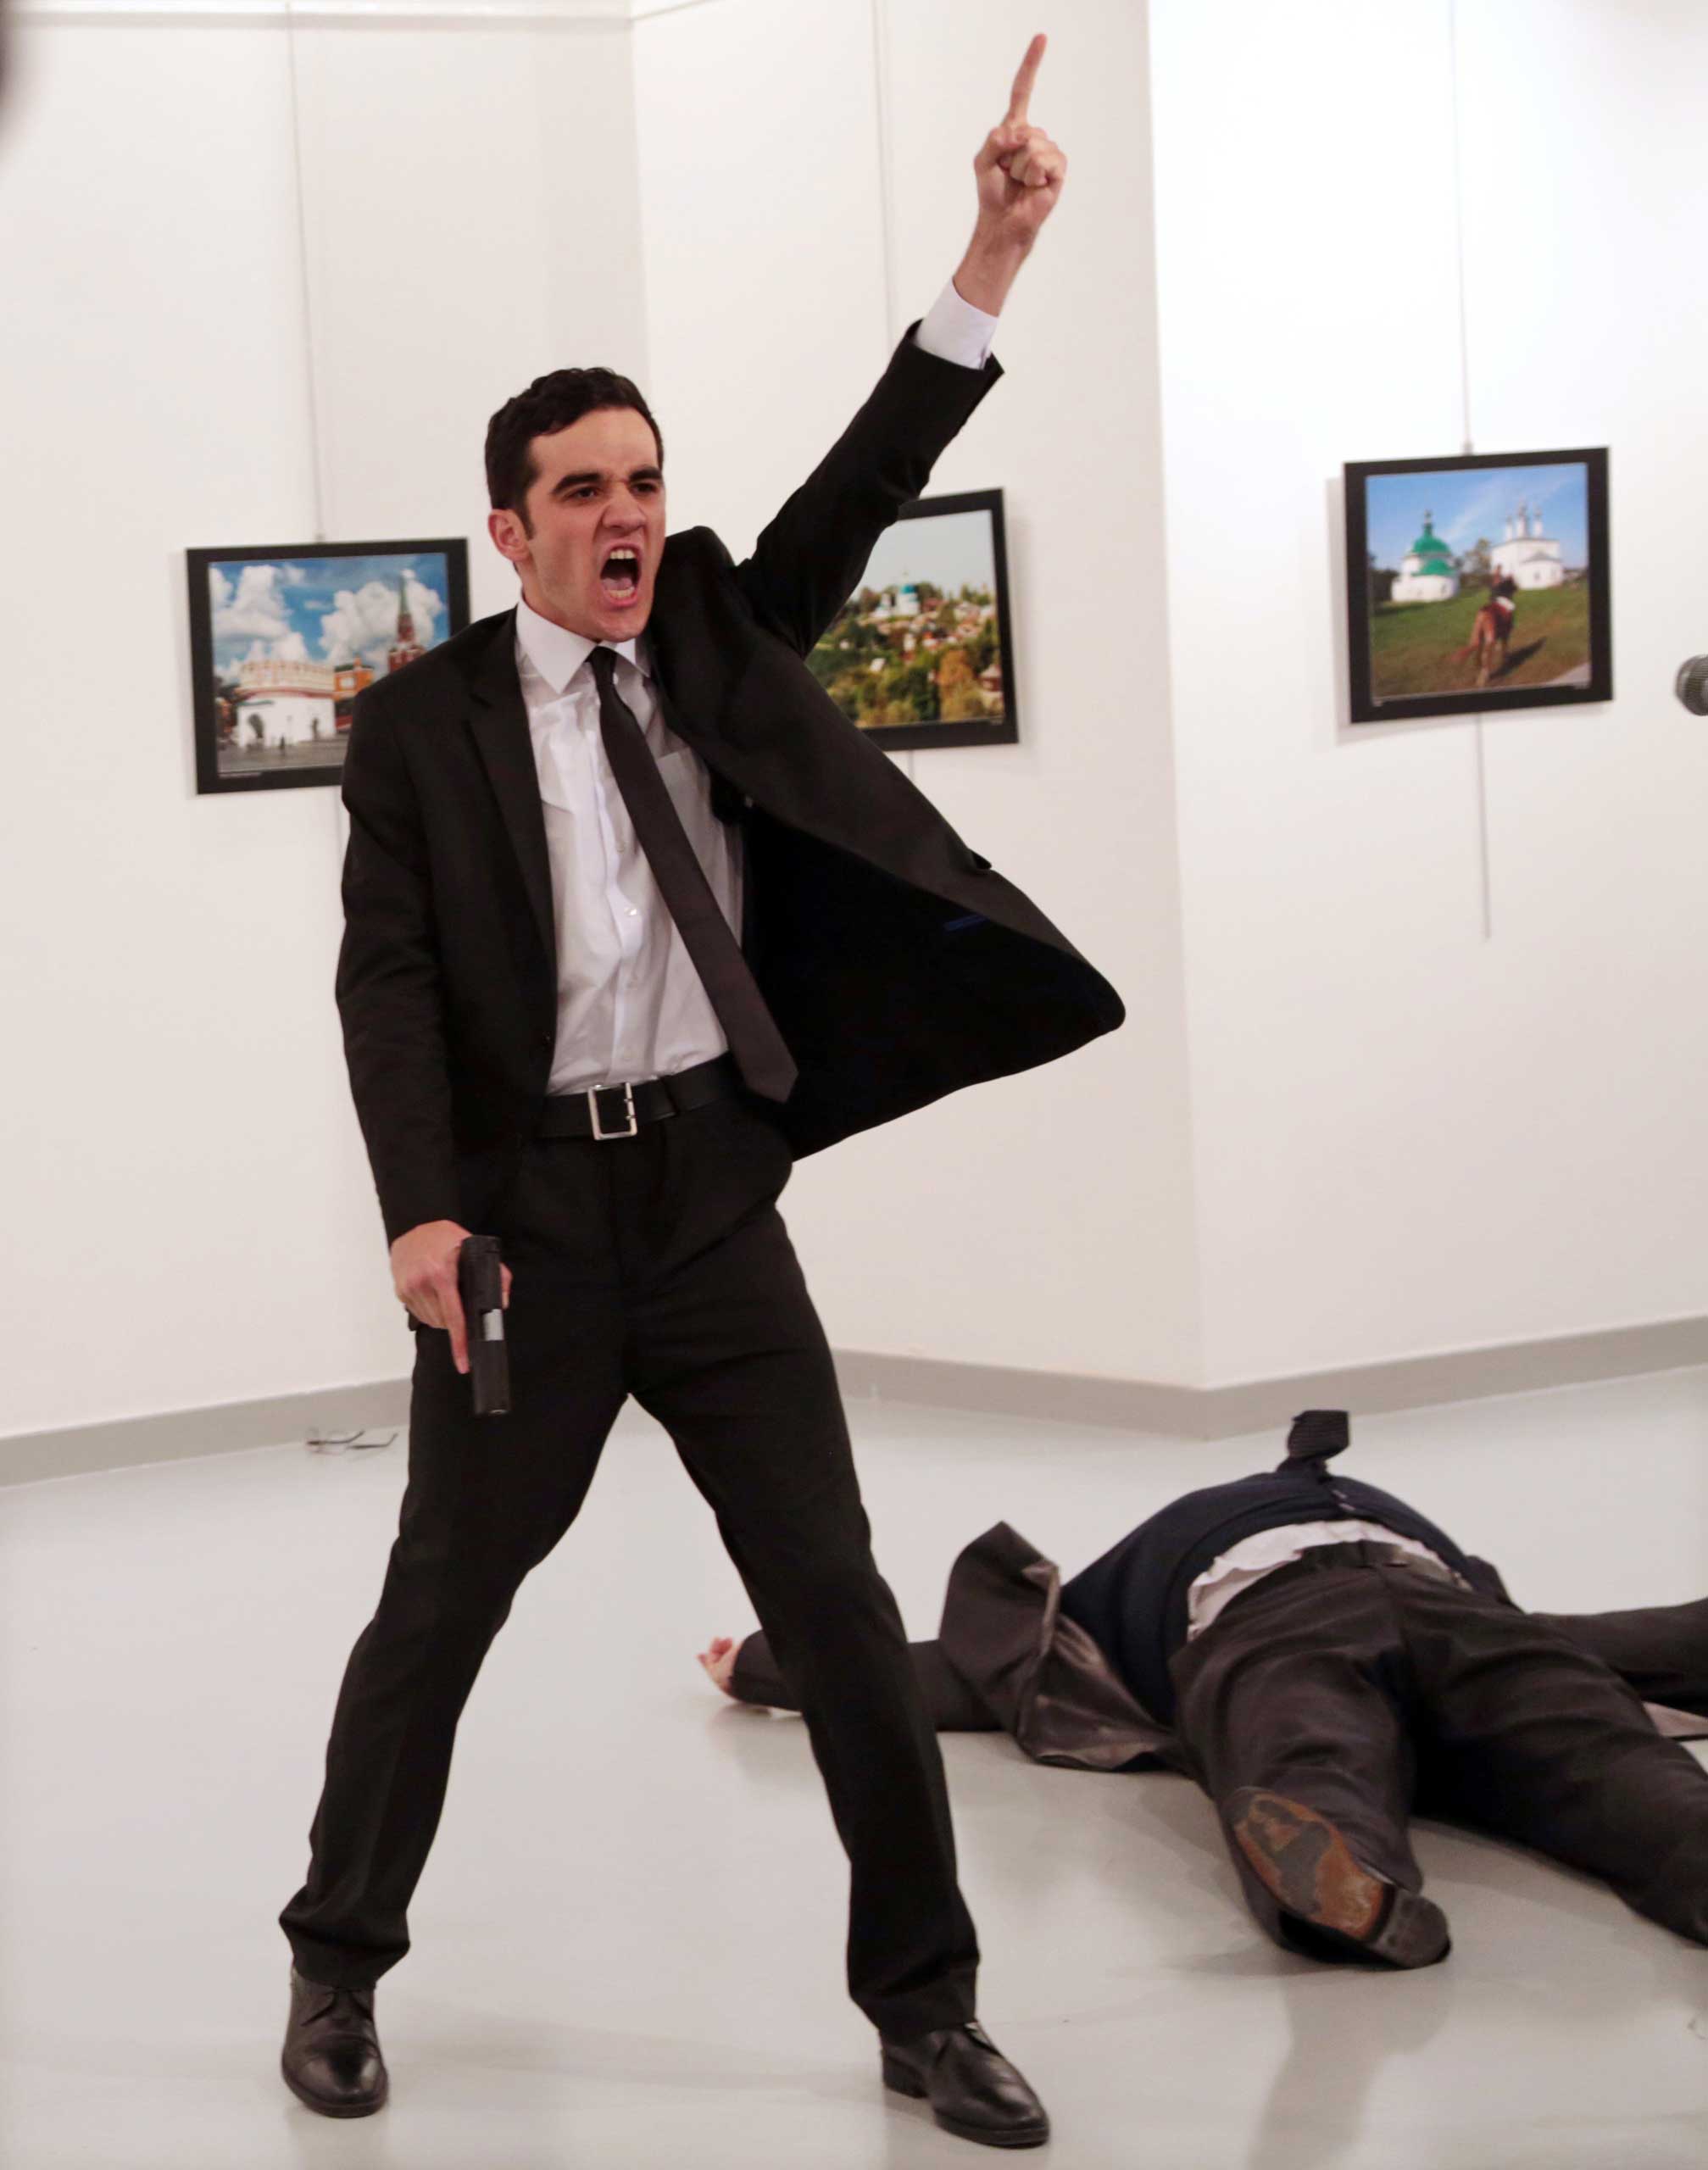 Mevlut Mert Altintas shouts after shooting Andrei Karlov, right, the Russian ambassador to Turkey, at an art gallery in Ankara, Turkey, Dec. 19, 2016. (Burhan Ozbilici—AP)